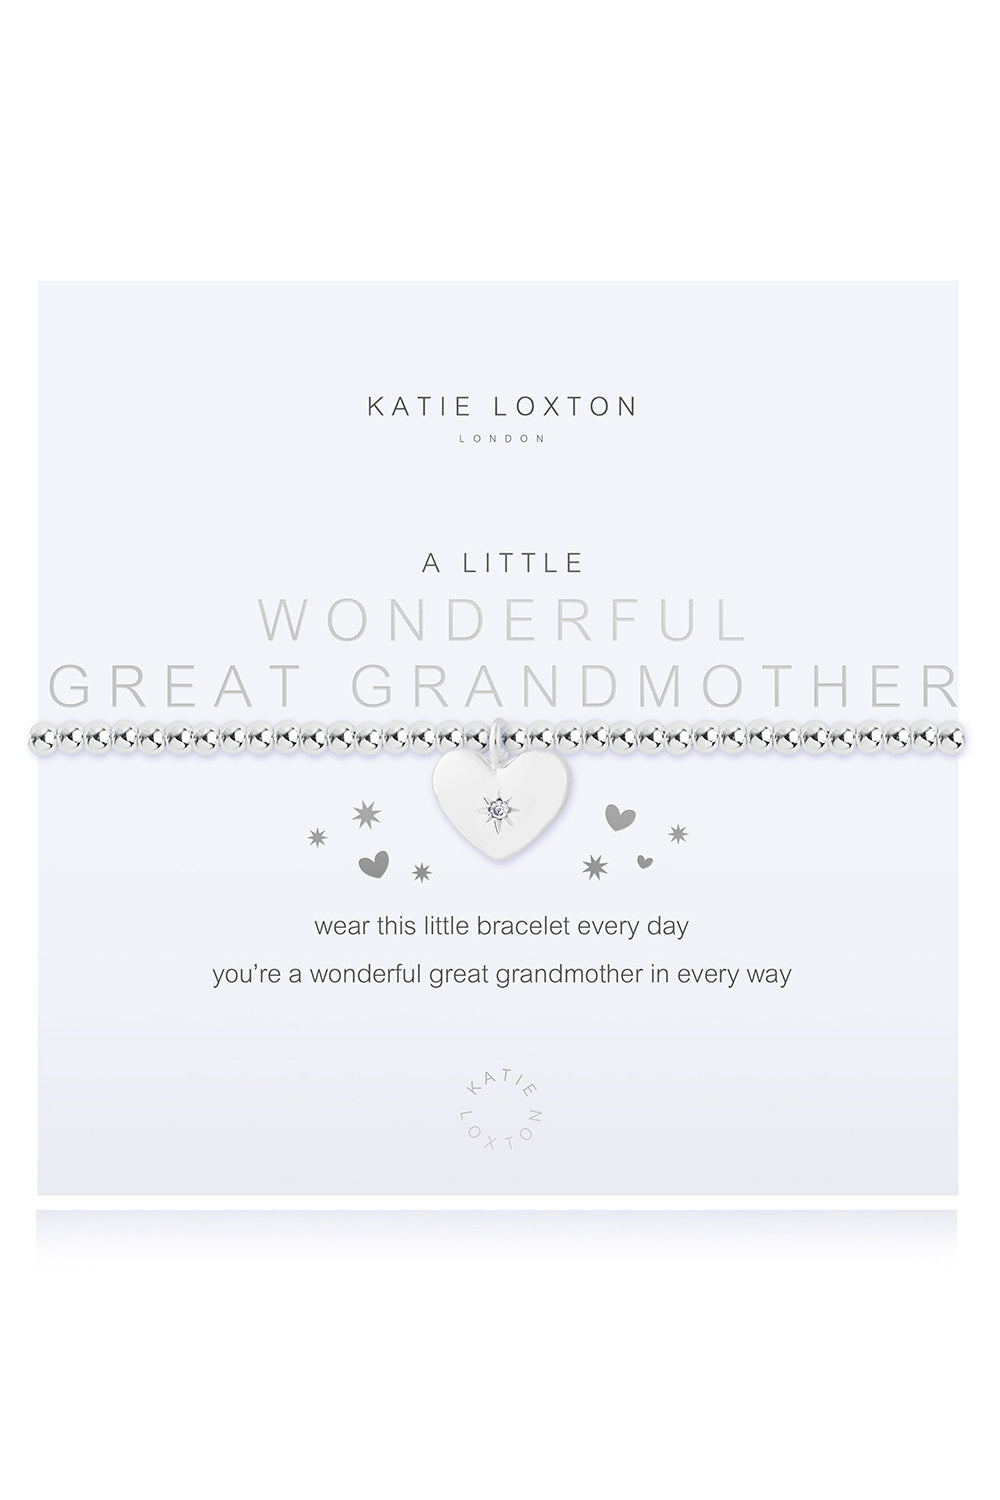 Littles Bracelet - Wonderful Great Grandmother